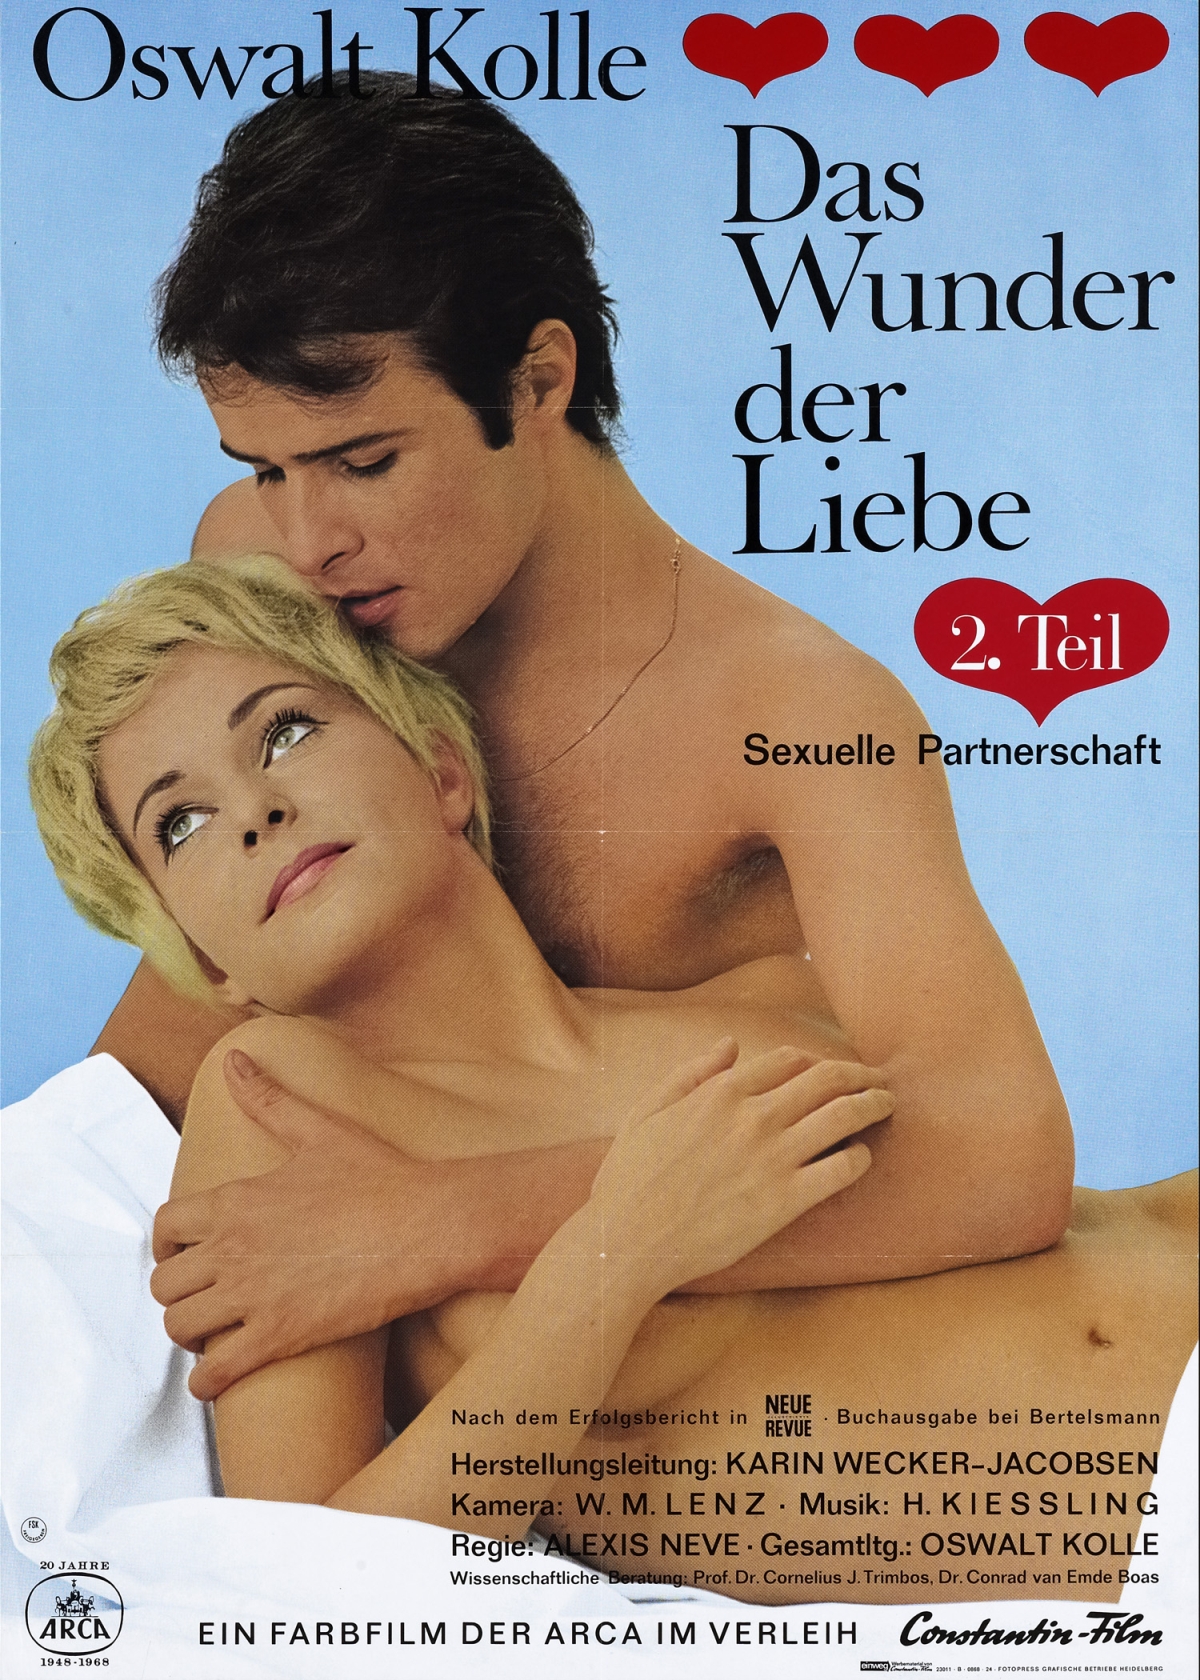 Film poster: "Oswalt Kolle. The Wonder of Love - Sexual Partnership"